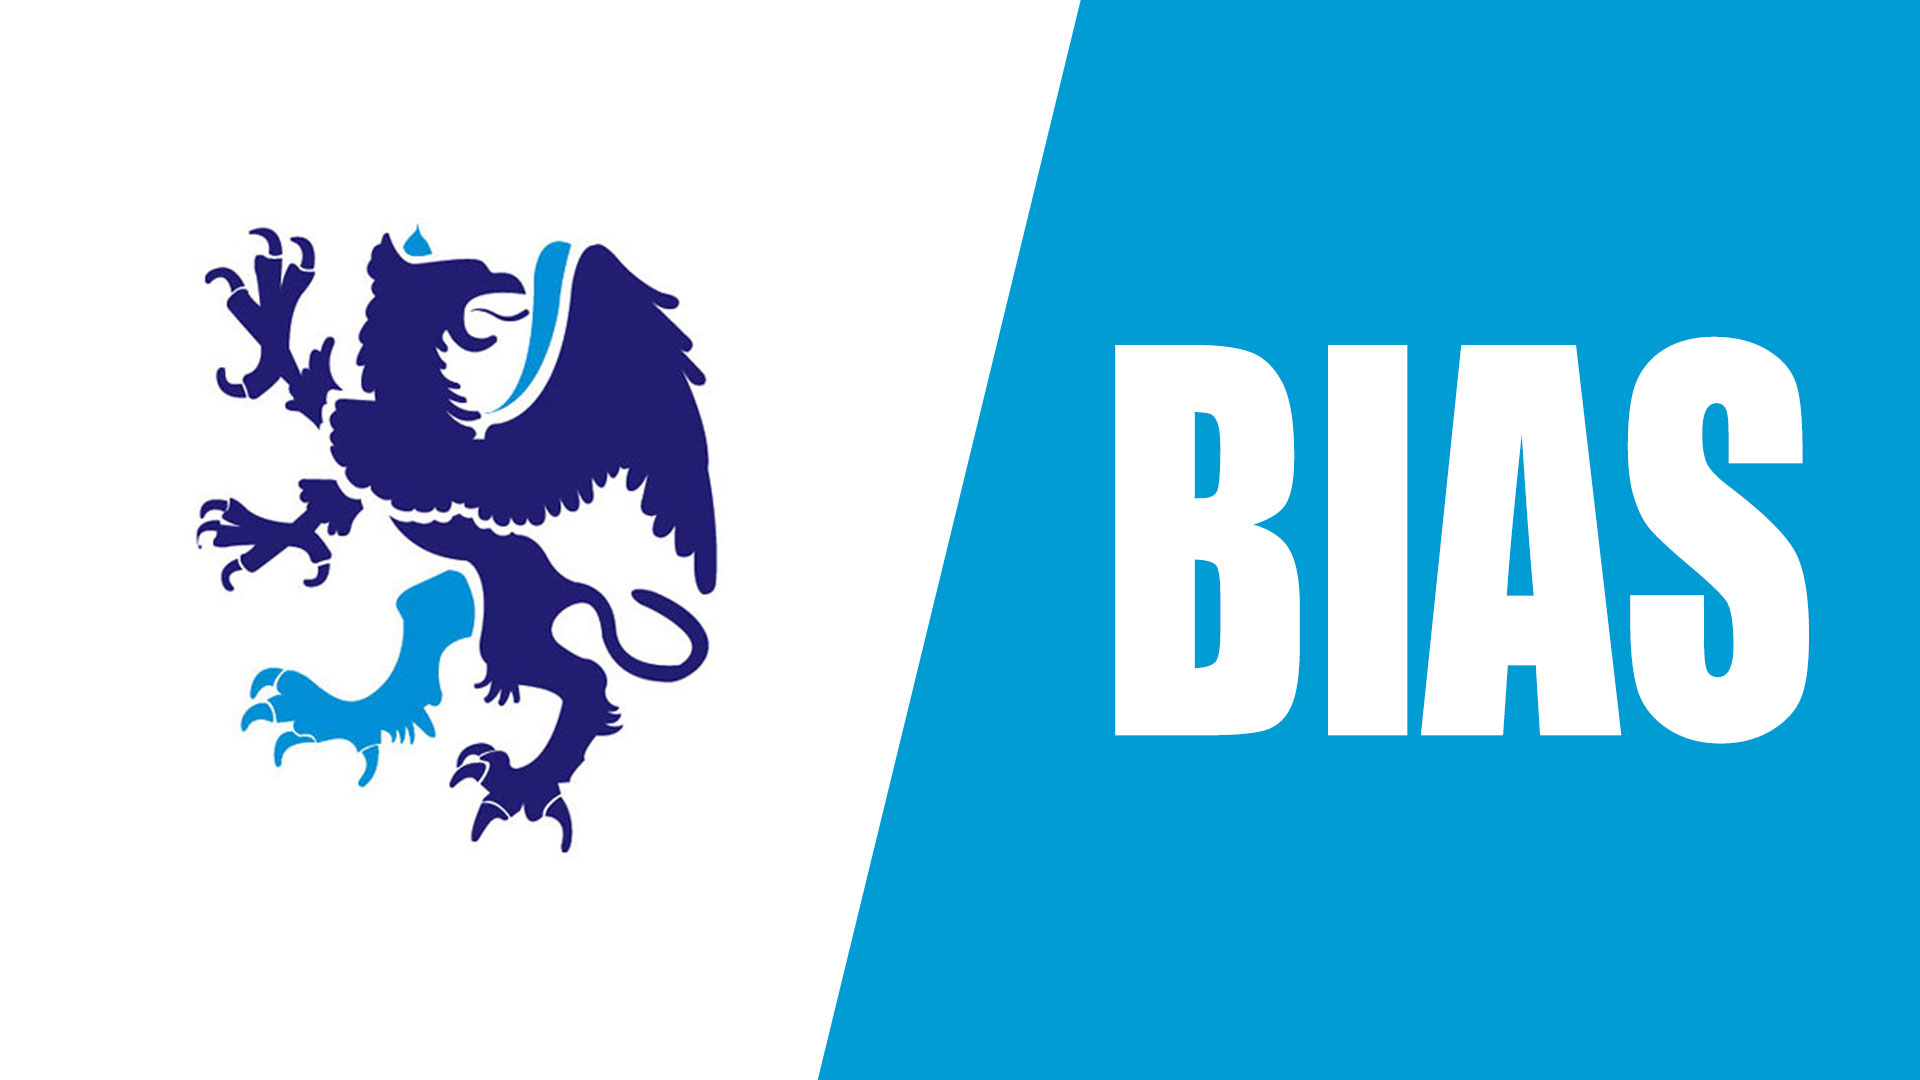 Newcomen & BIAS Logos